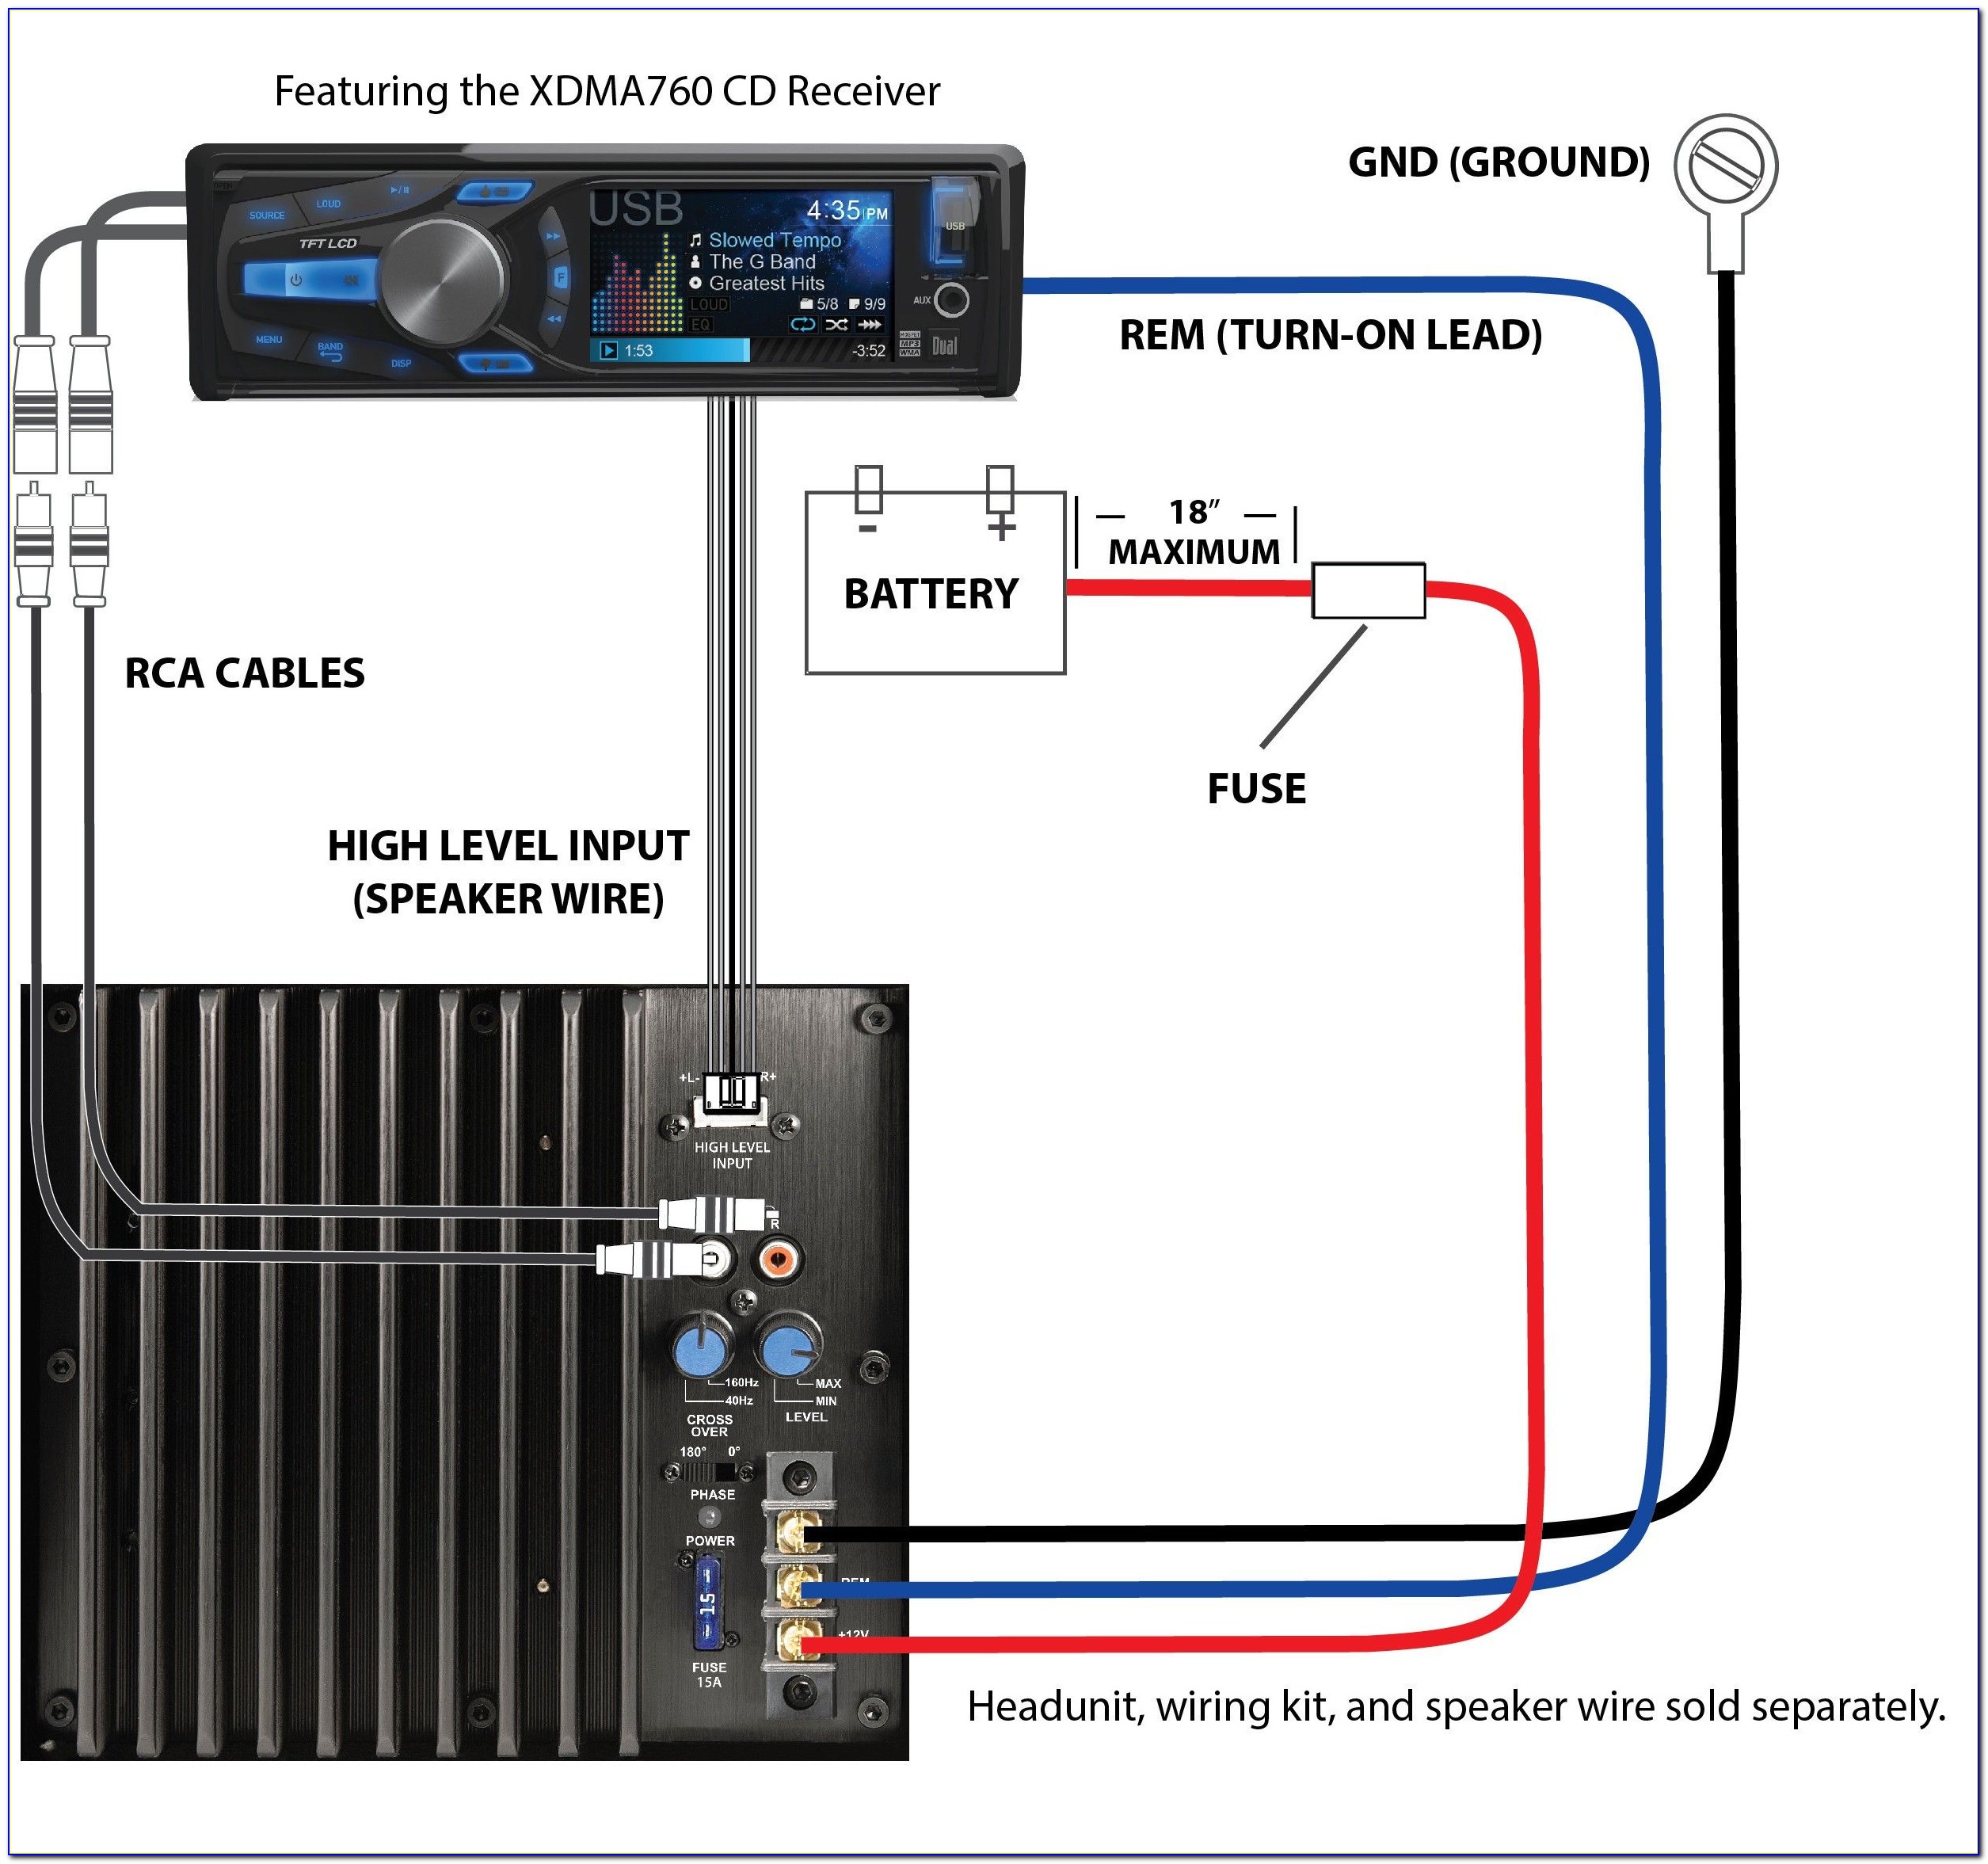 Car Audio Wiring Diagrams Multiple Amps